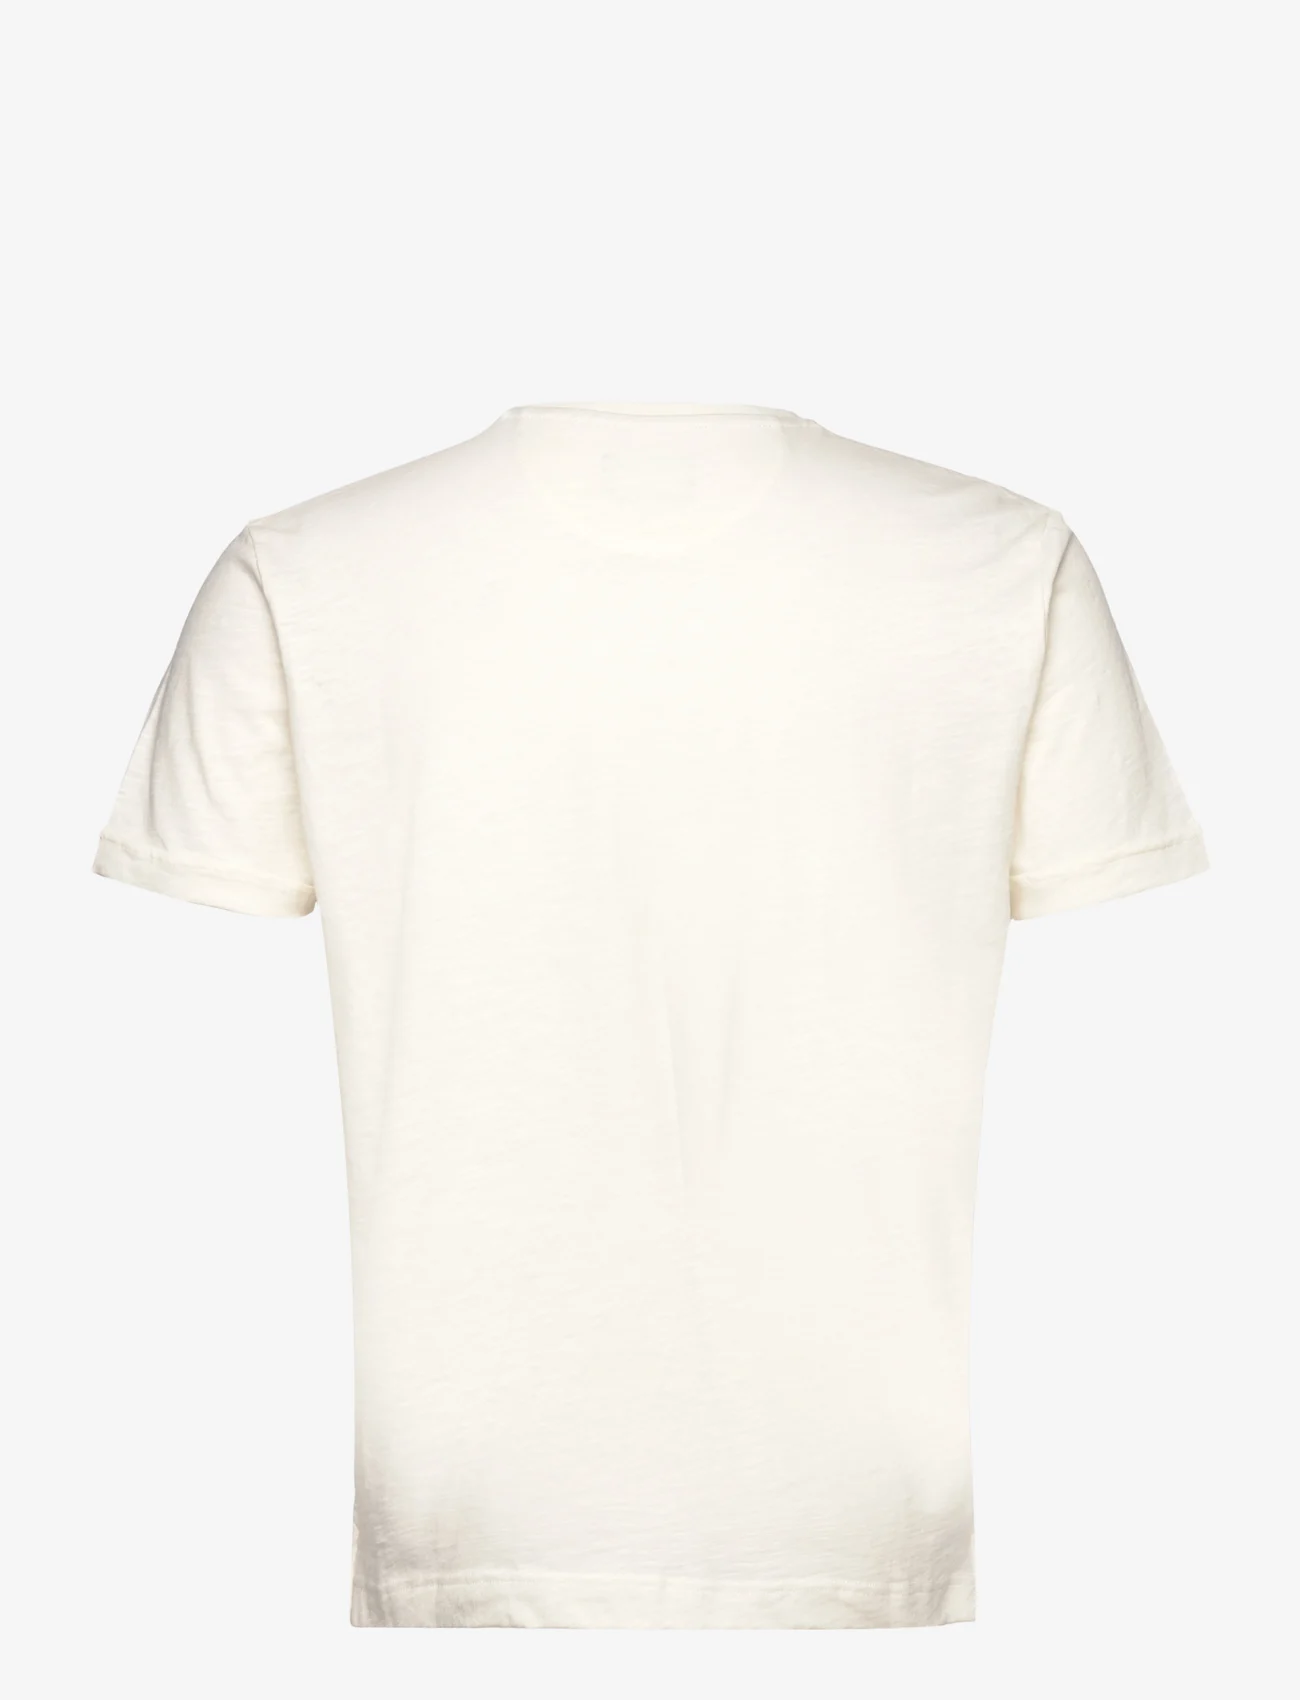 Hackett London - CTN LINEN POCKET TEE - basic t-shirts - off white - 1